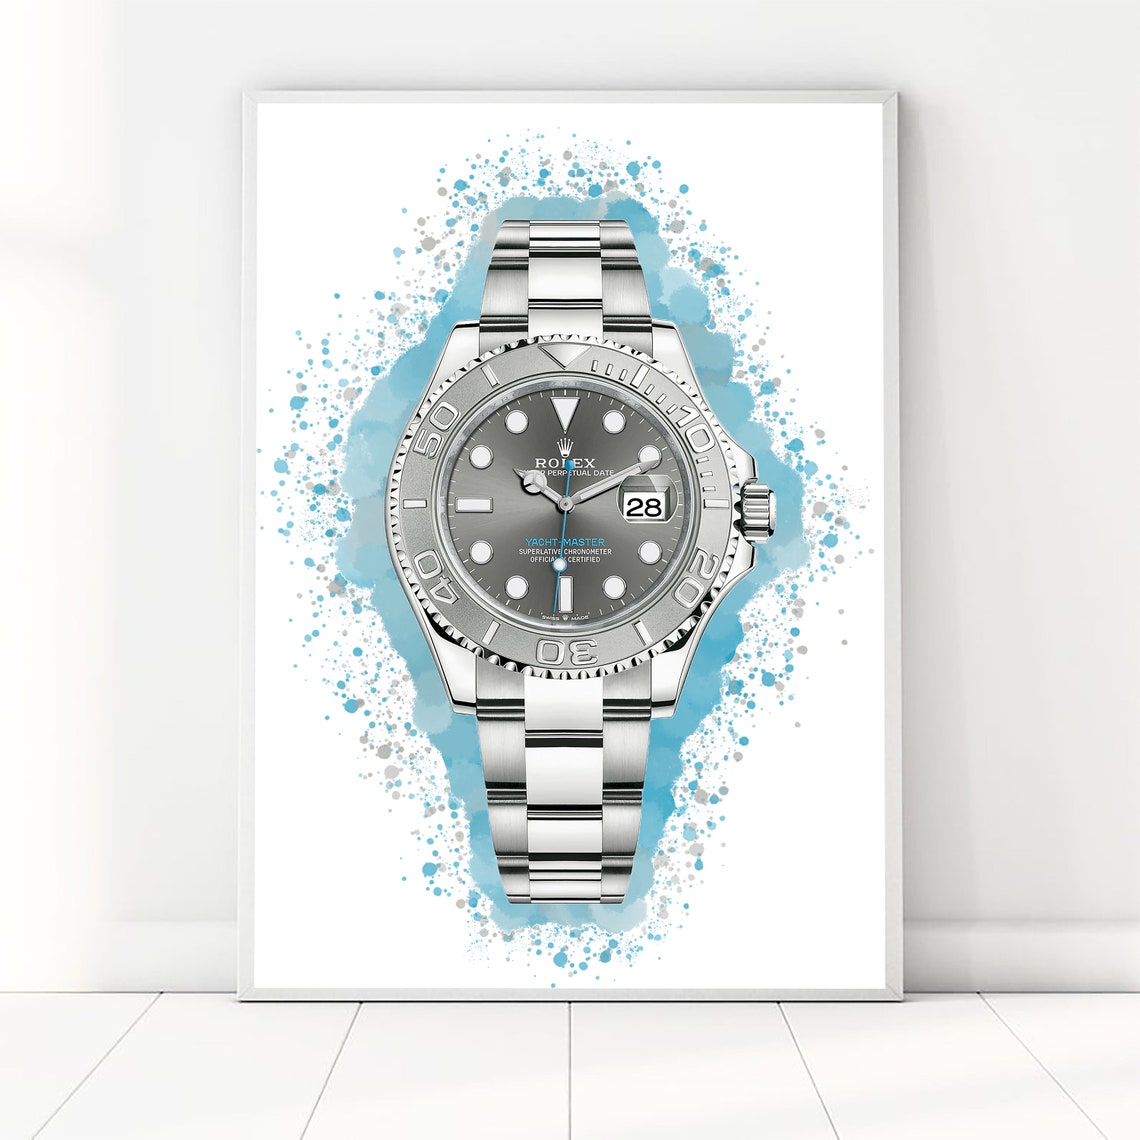 Rolex Yacht-Master Luxury Watch Wall Art Print Poster | Etsy